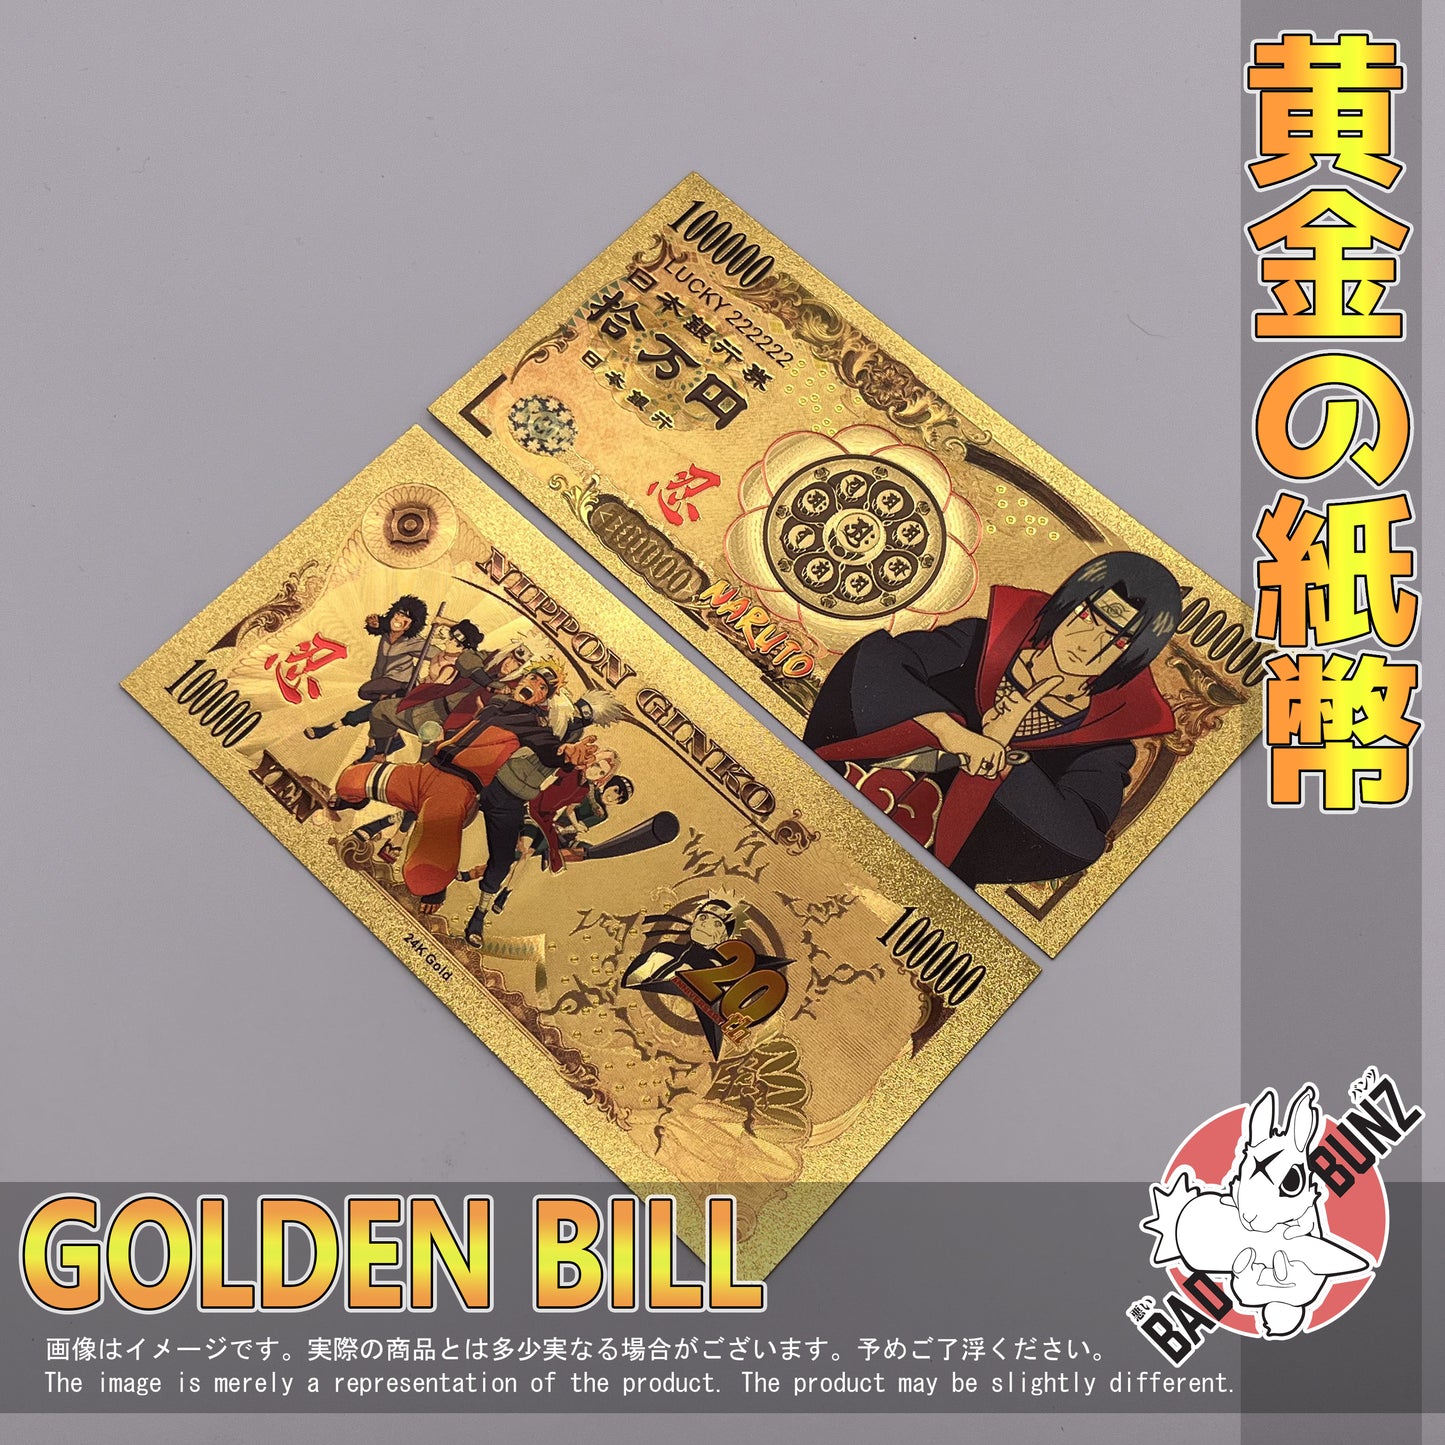 (NAR-05GBILL) ITACHI Naruto Anime Golden Japanese Yen Bill